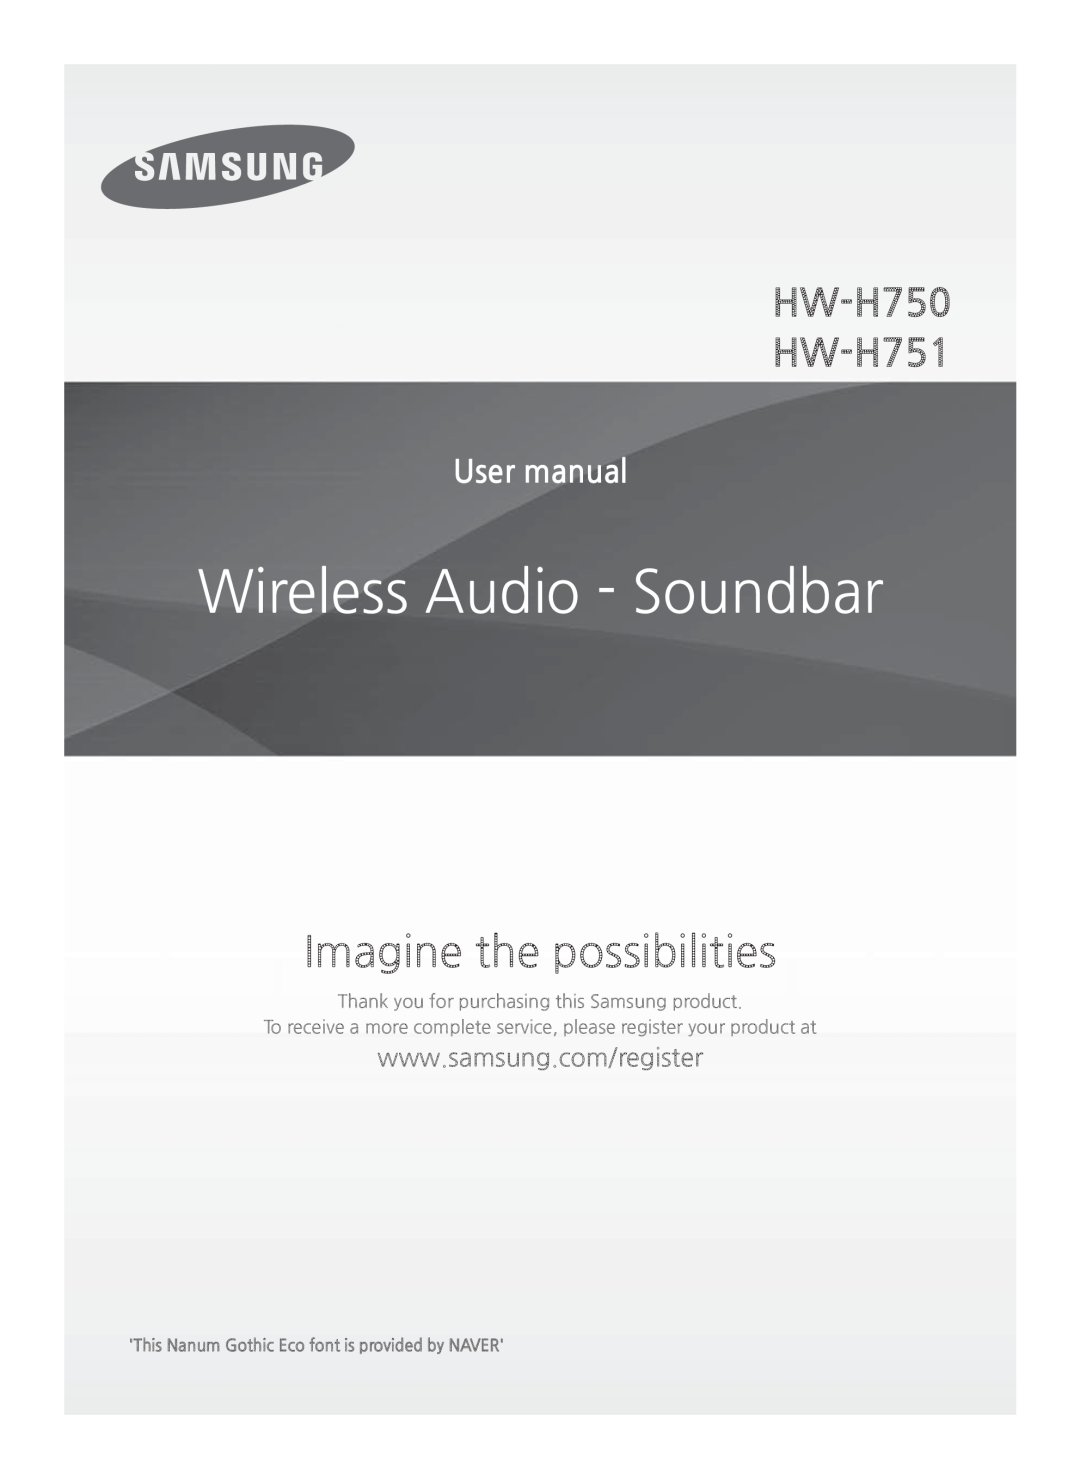 Samsung HWH750 manual Wireless Audio - Soundbar, Imagine the possibilities, HW-H750 HW-H751 